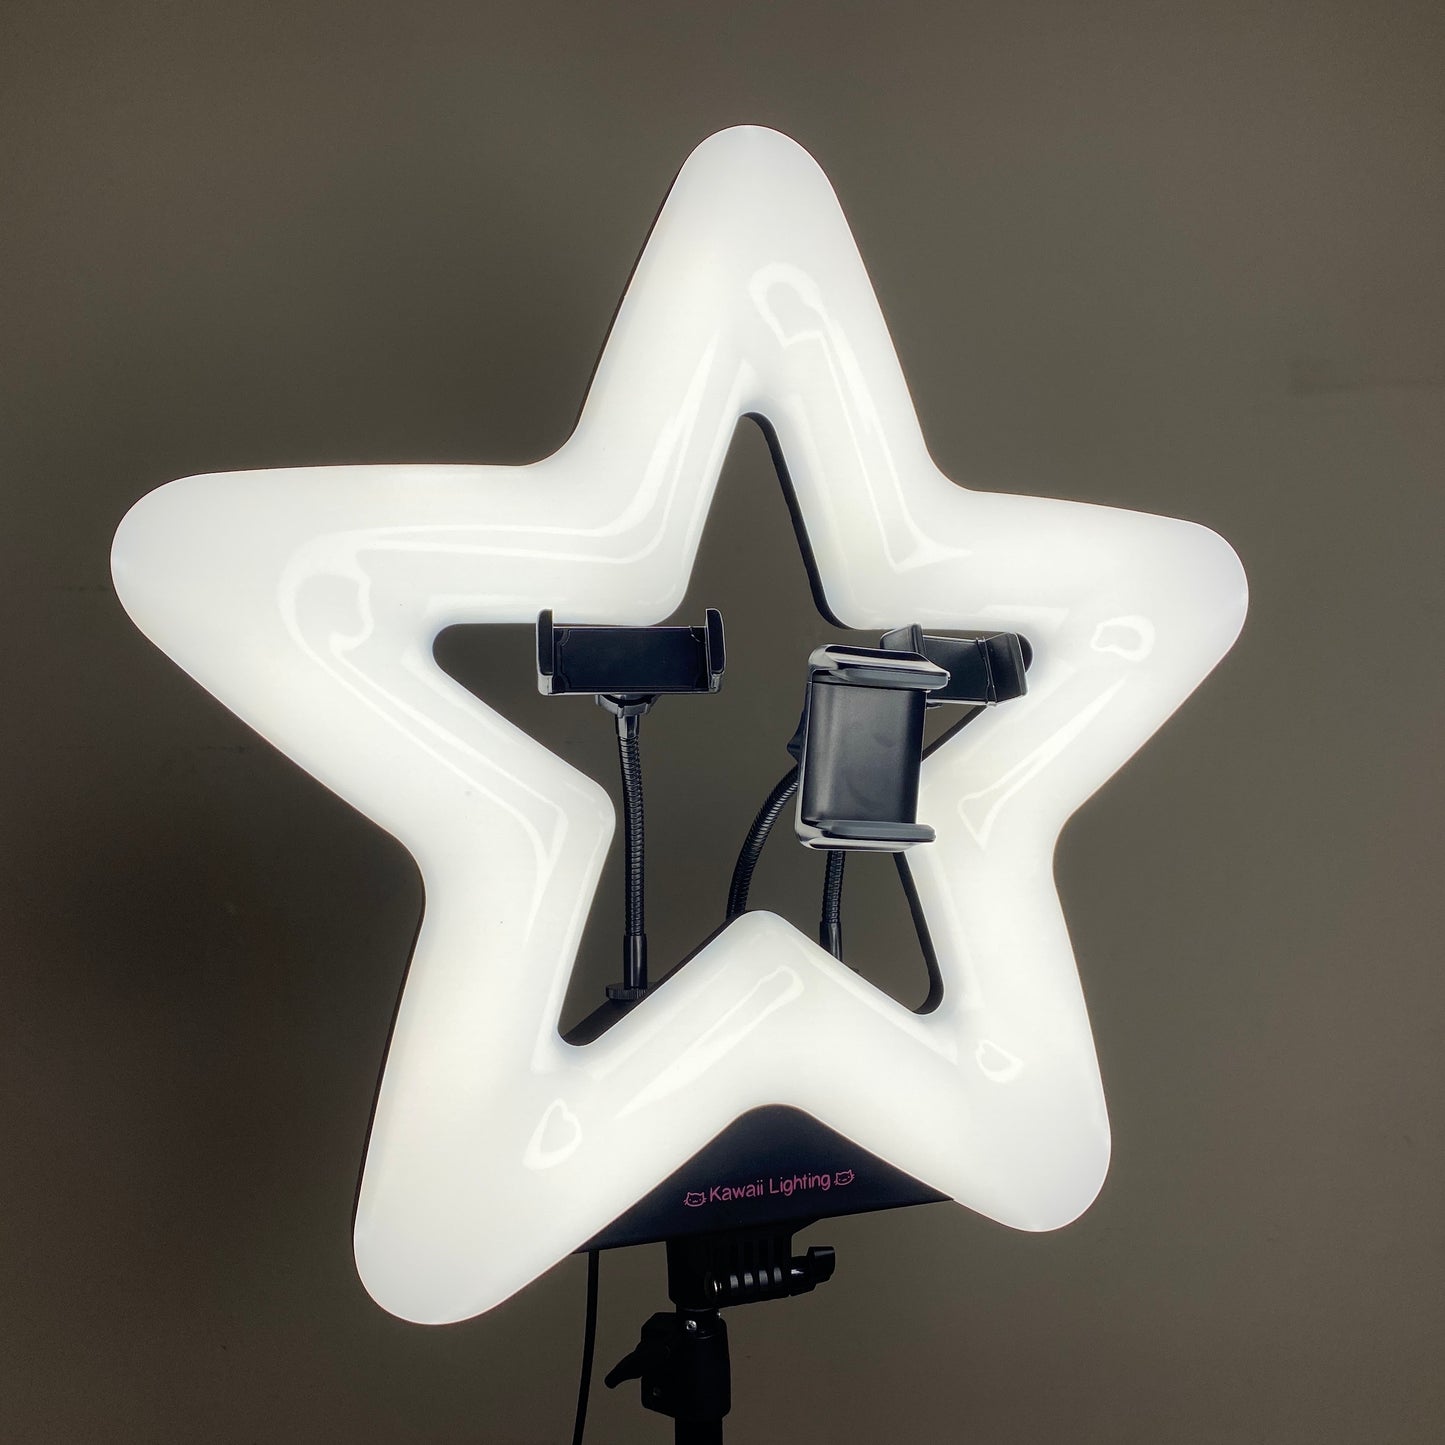 Star Ring Light RGB by Kawaii Lighting (RK52) 20"/50cm Professional Star Shape Dimmable RGB LED Ring Light Kit